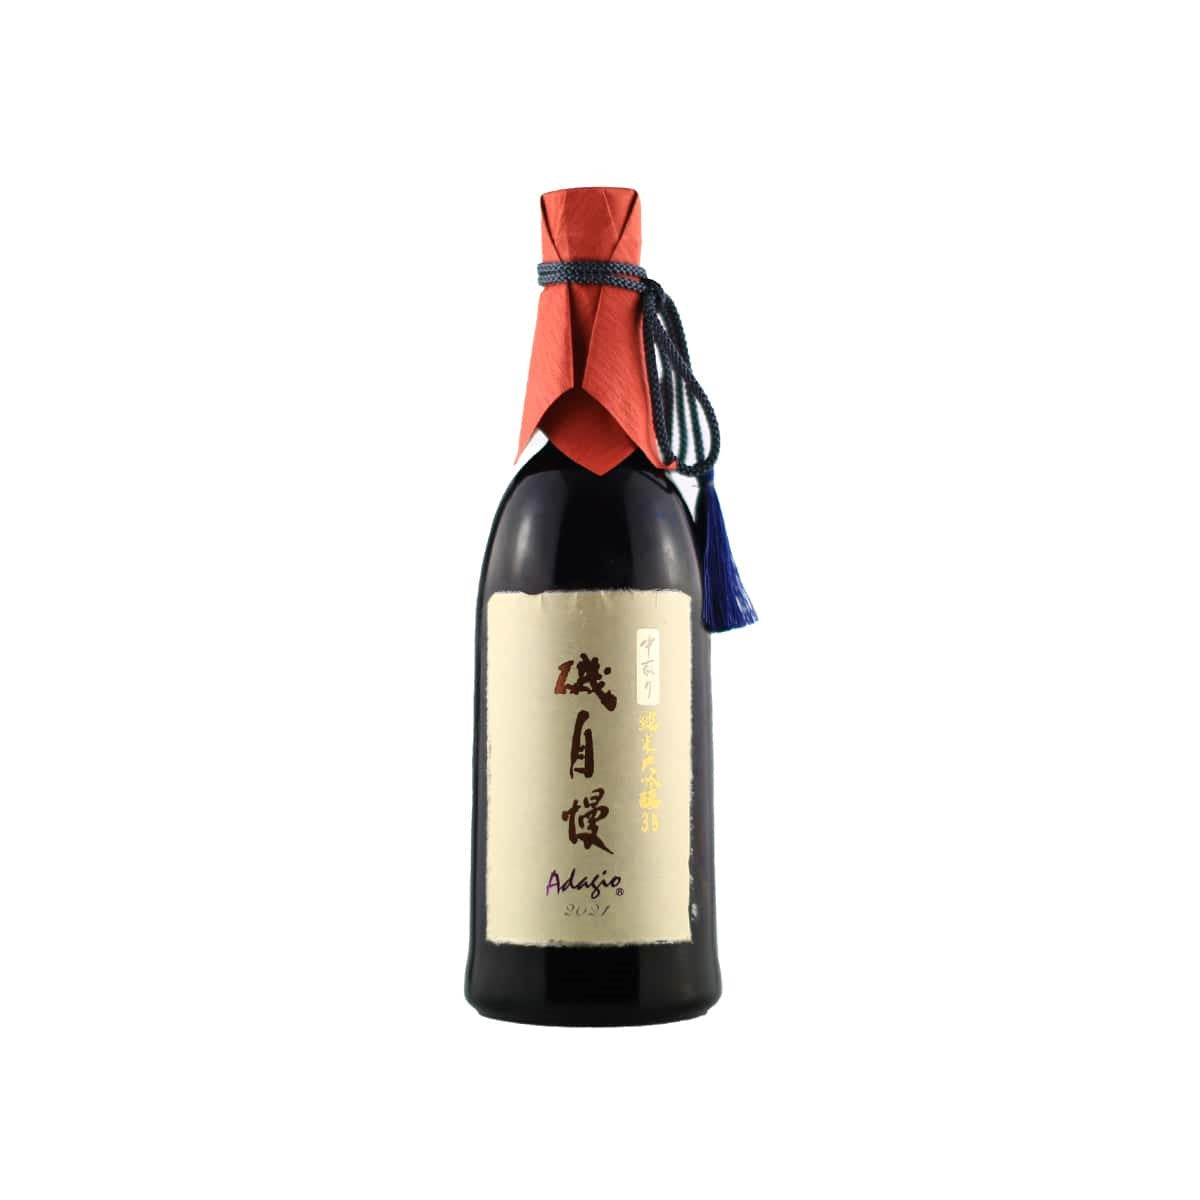 Isojiman Adagio Summit - Discover the Exclusivity of Aged Sake